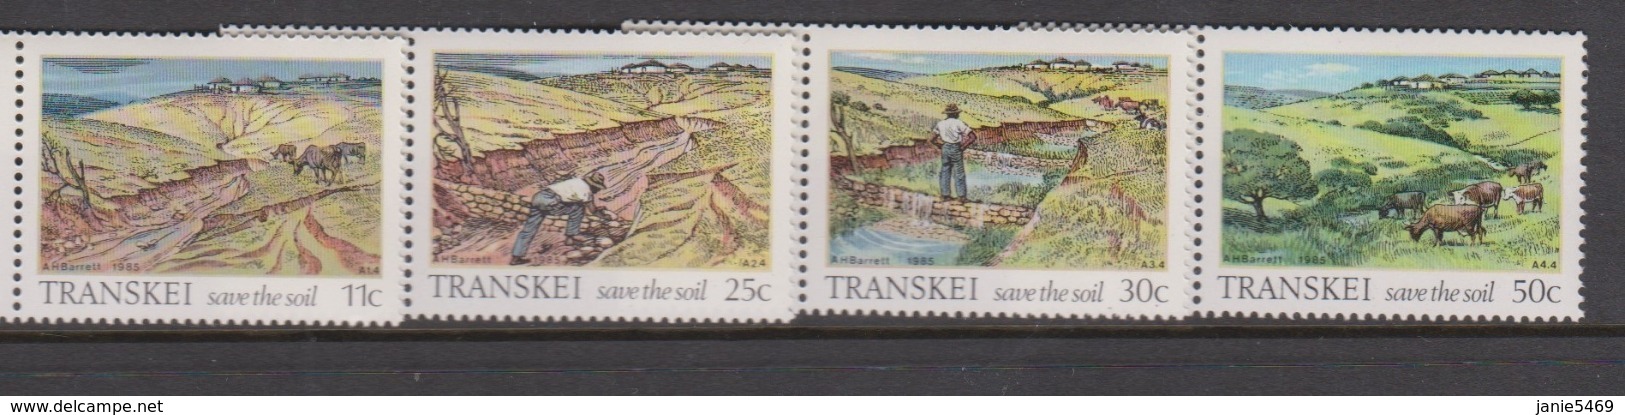 South Africa-Transkei SG 164-167 1985 Soil Conservation,Mint Never Hinged - Transkei